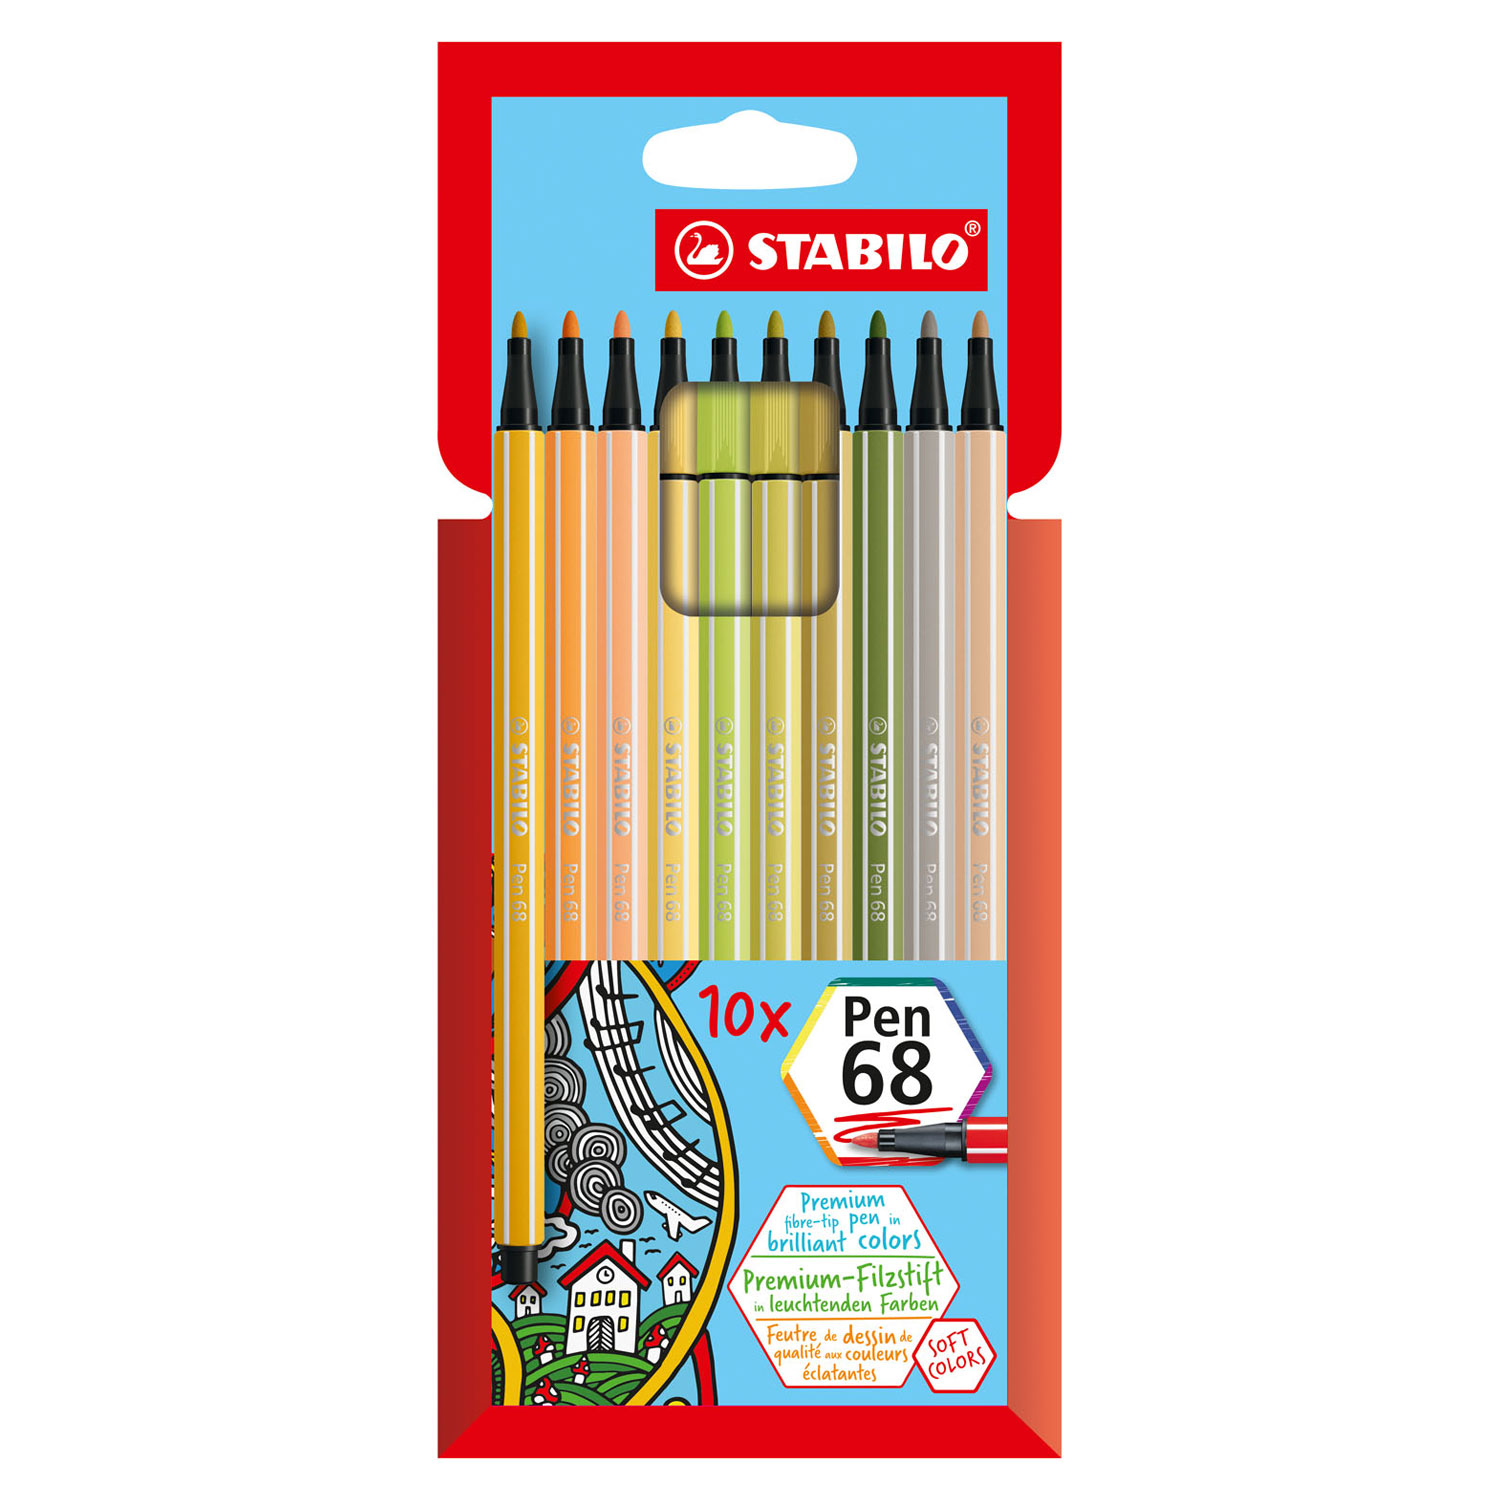 STABILO Pen 68 Felt-tip pens, 10 pcs.